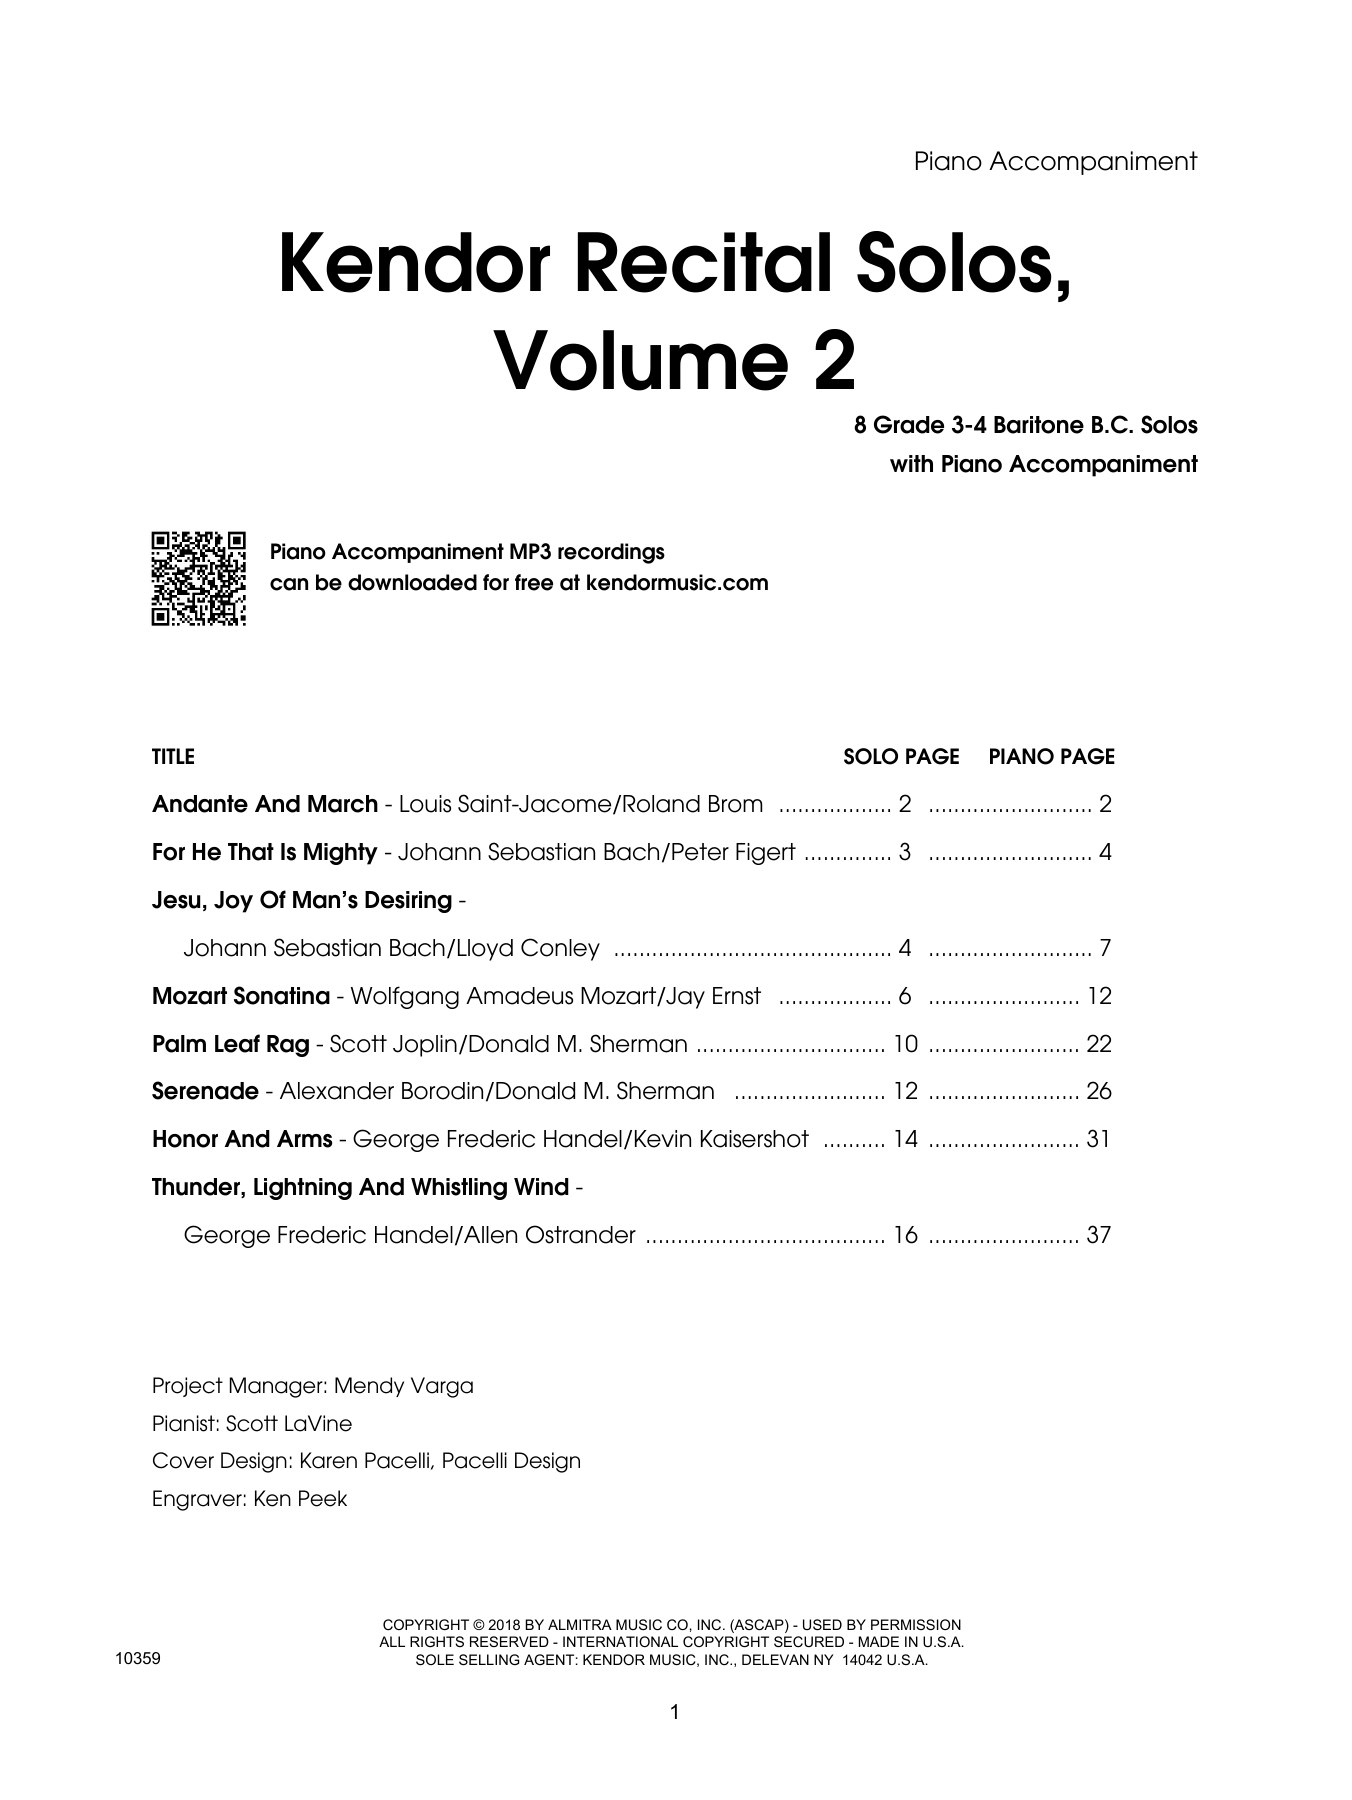 Kendor Recital Solos, Volume 2 - Piano Accompaniment (Brass Solo) von Various